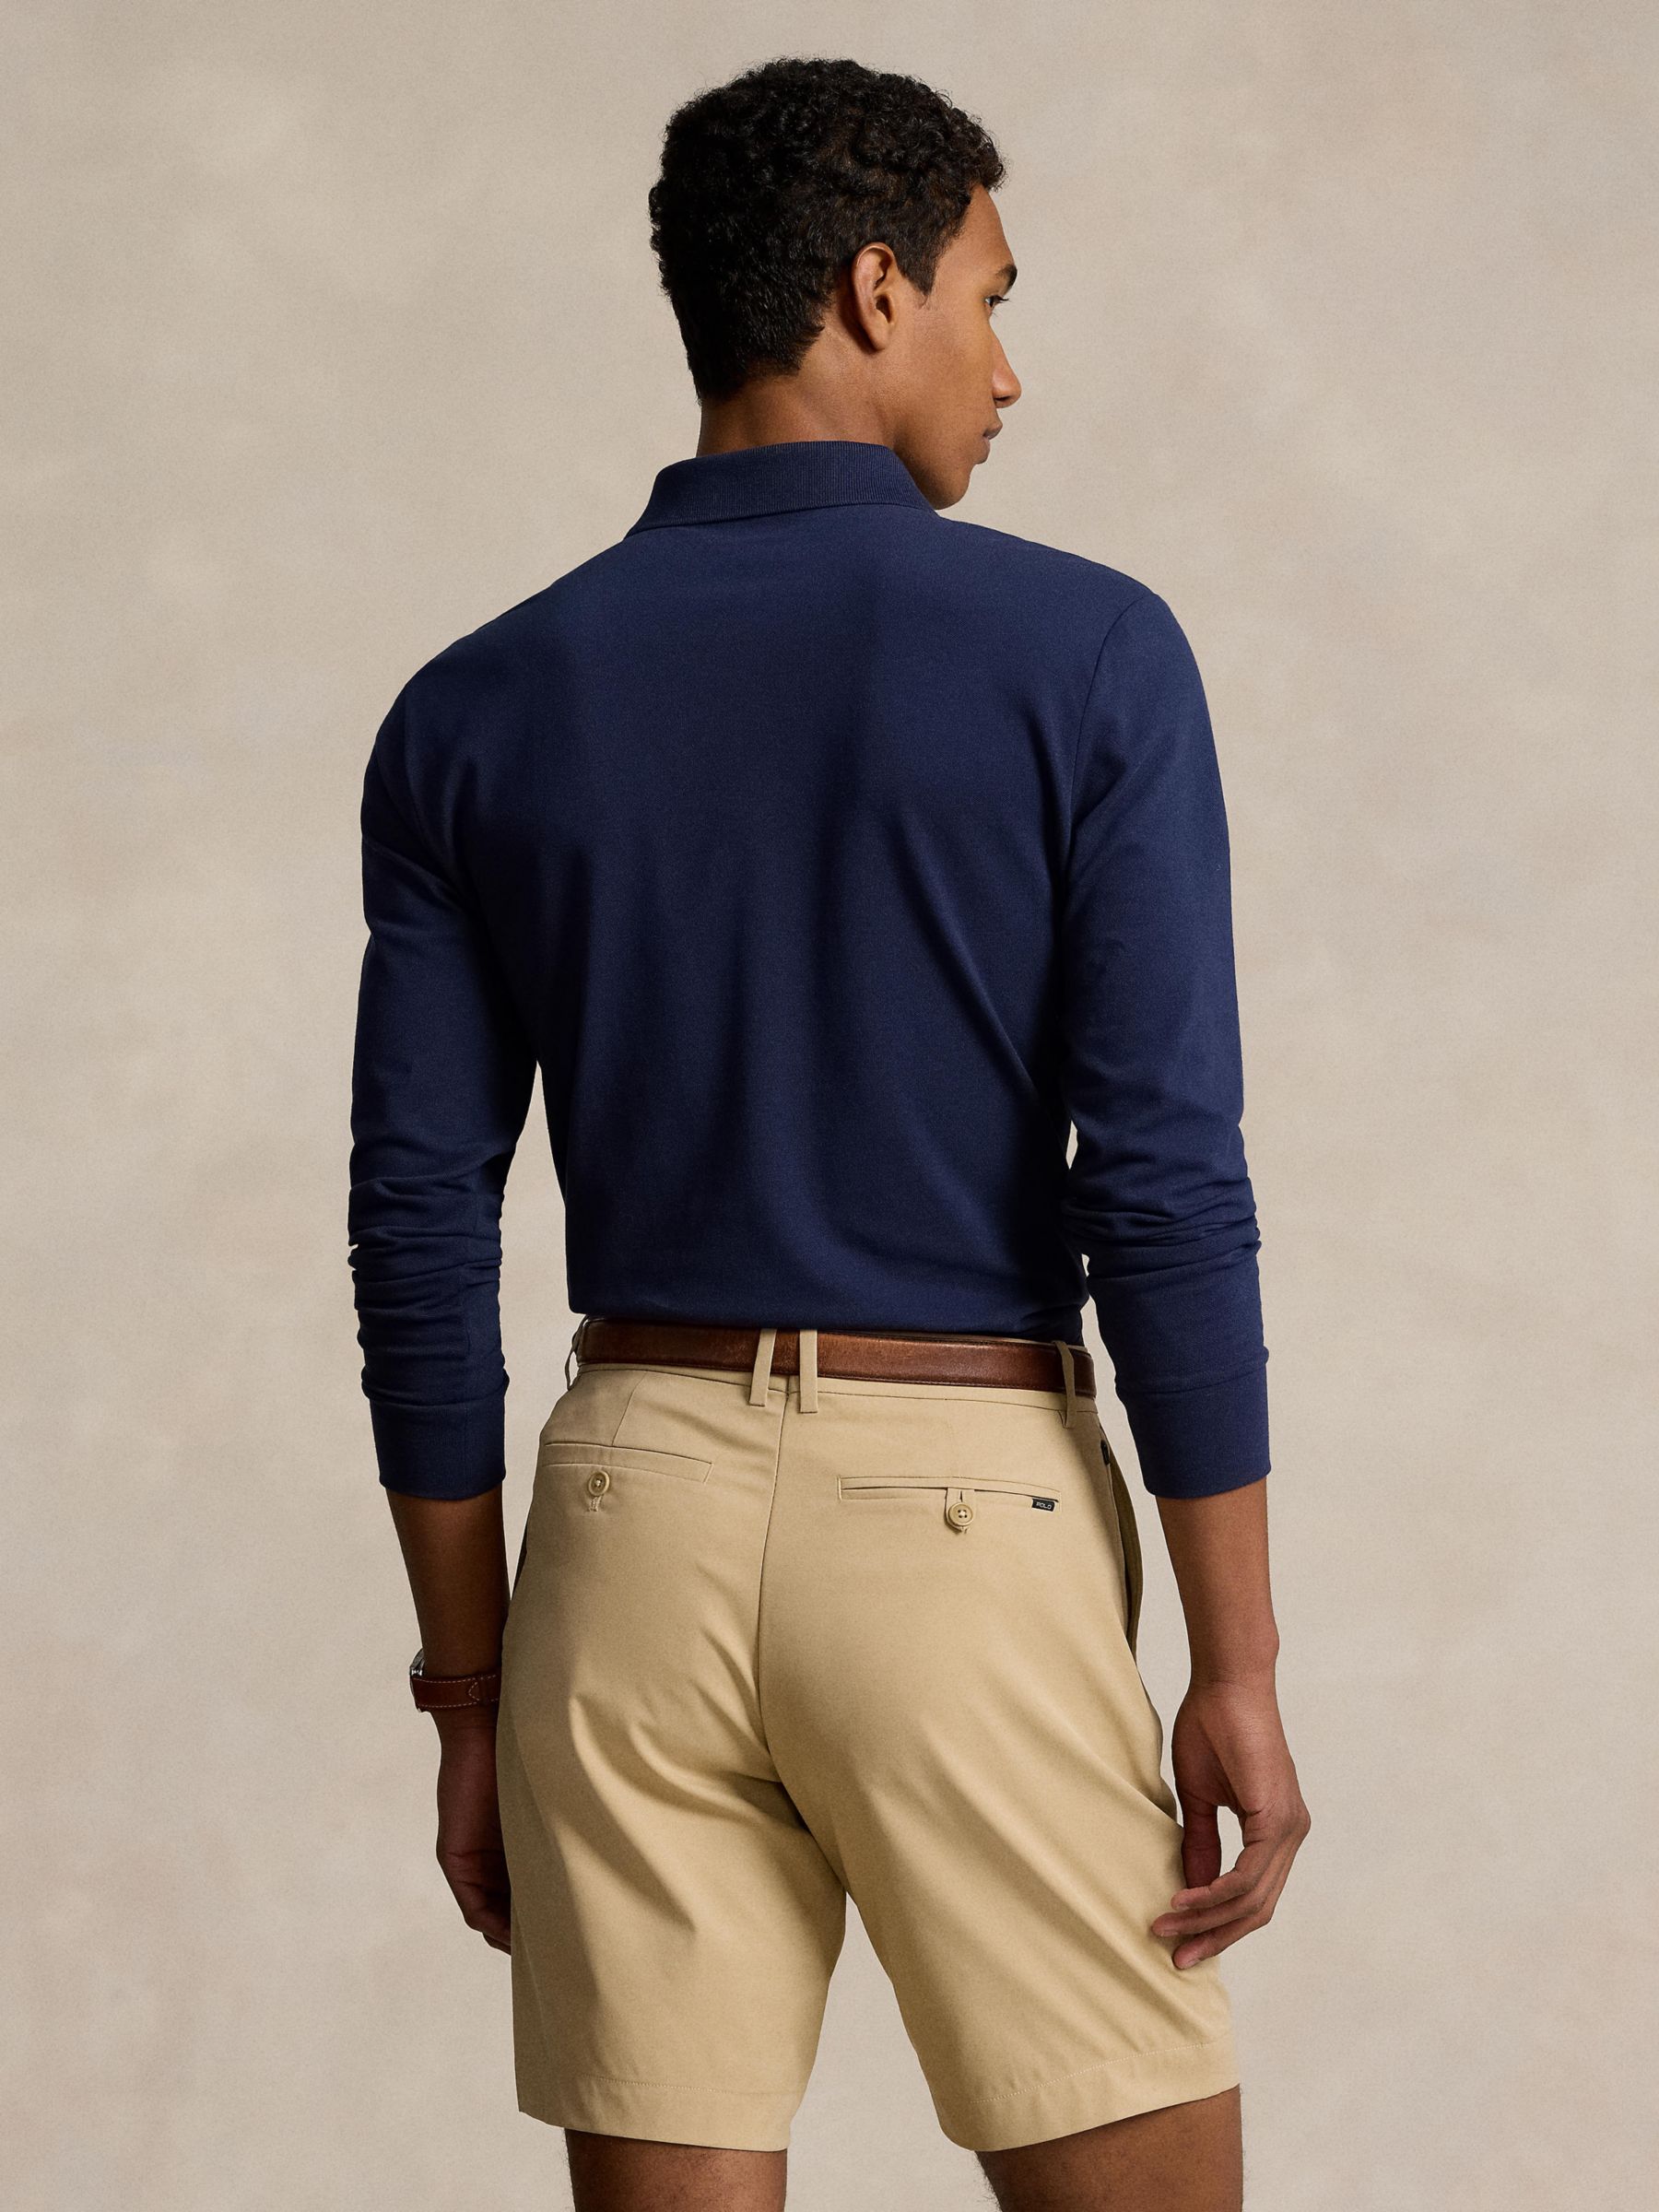 Ralph Lauren Tailored Fit Performance Polo Shirt, Navy, S